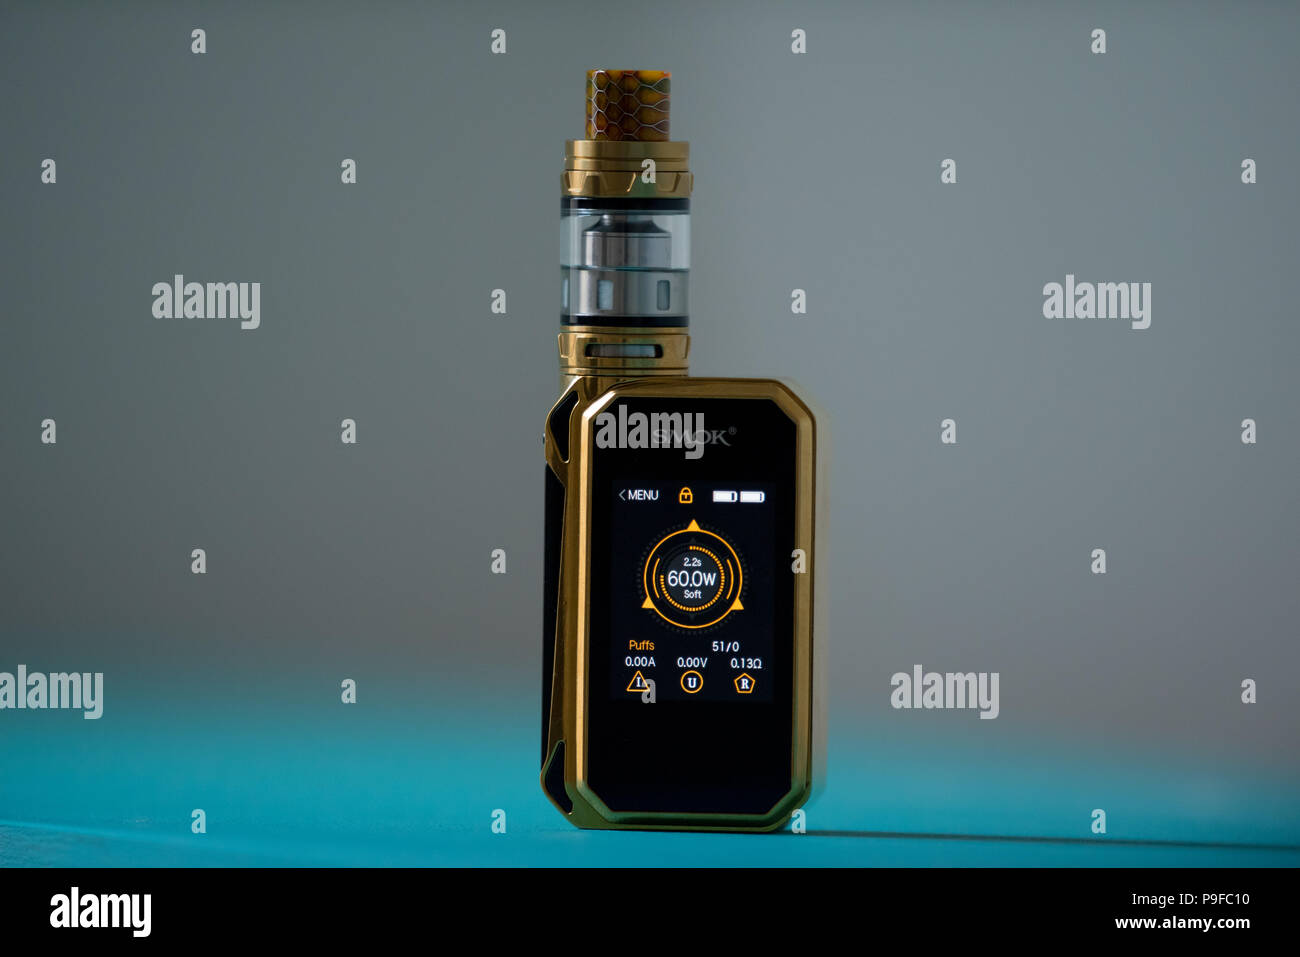 E cigarette Smok Gpriv 2 220 watts vaping mod for vapers Stock Photo - Alamy